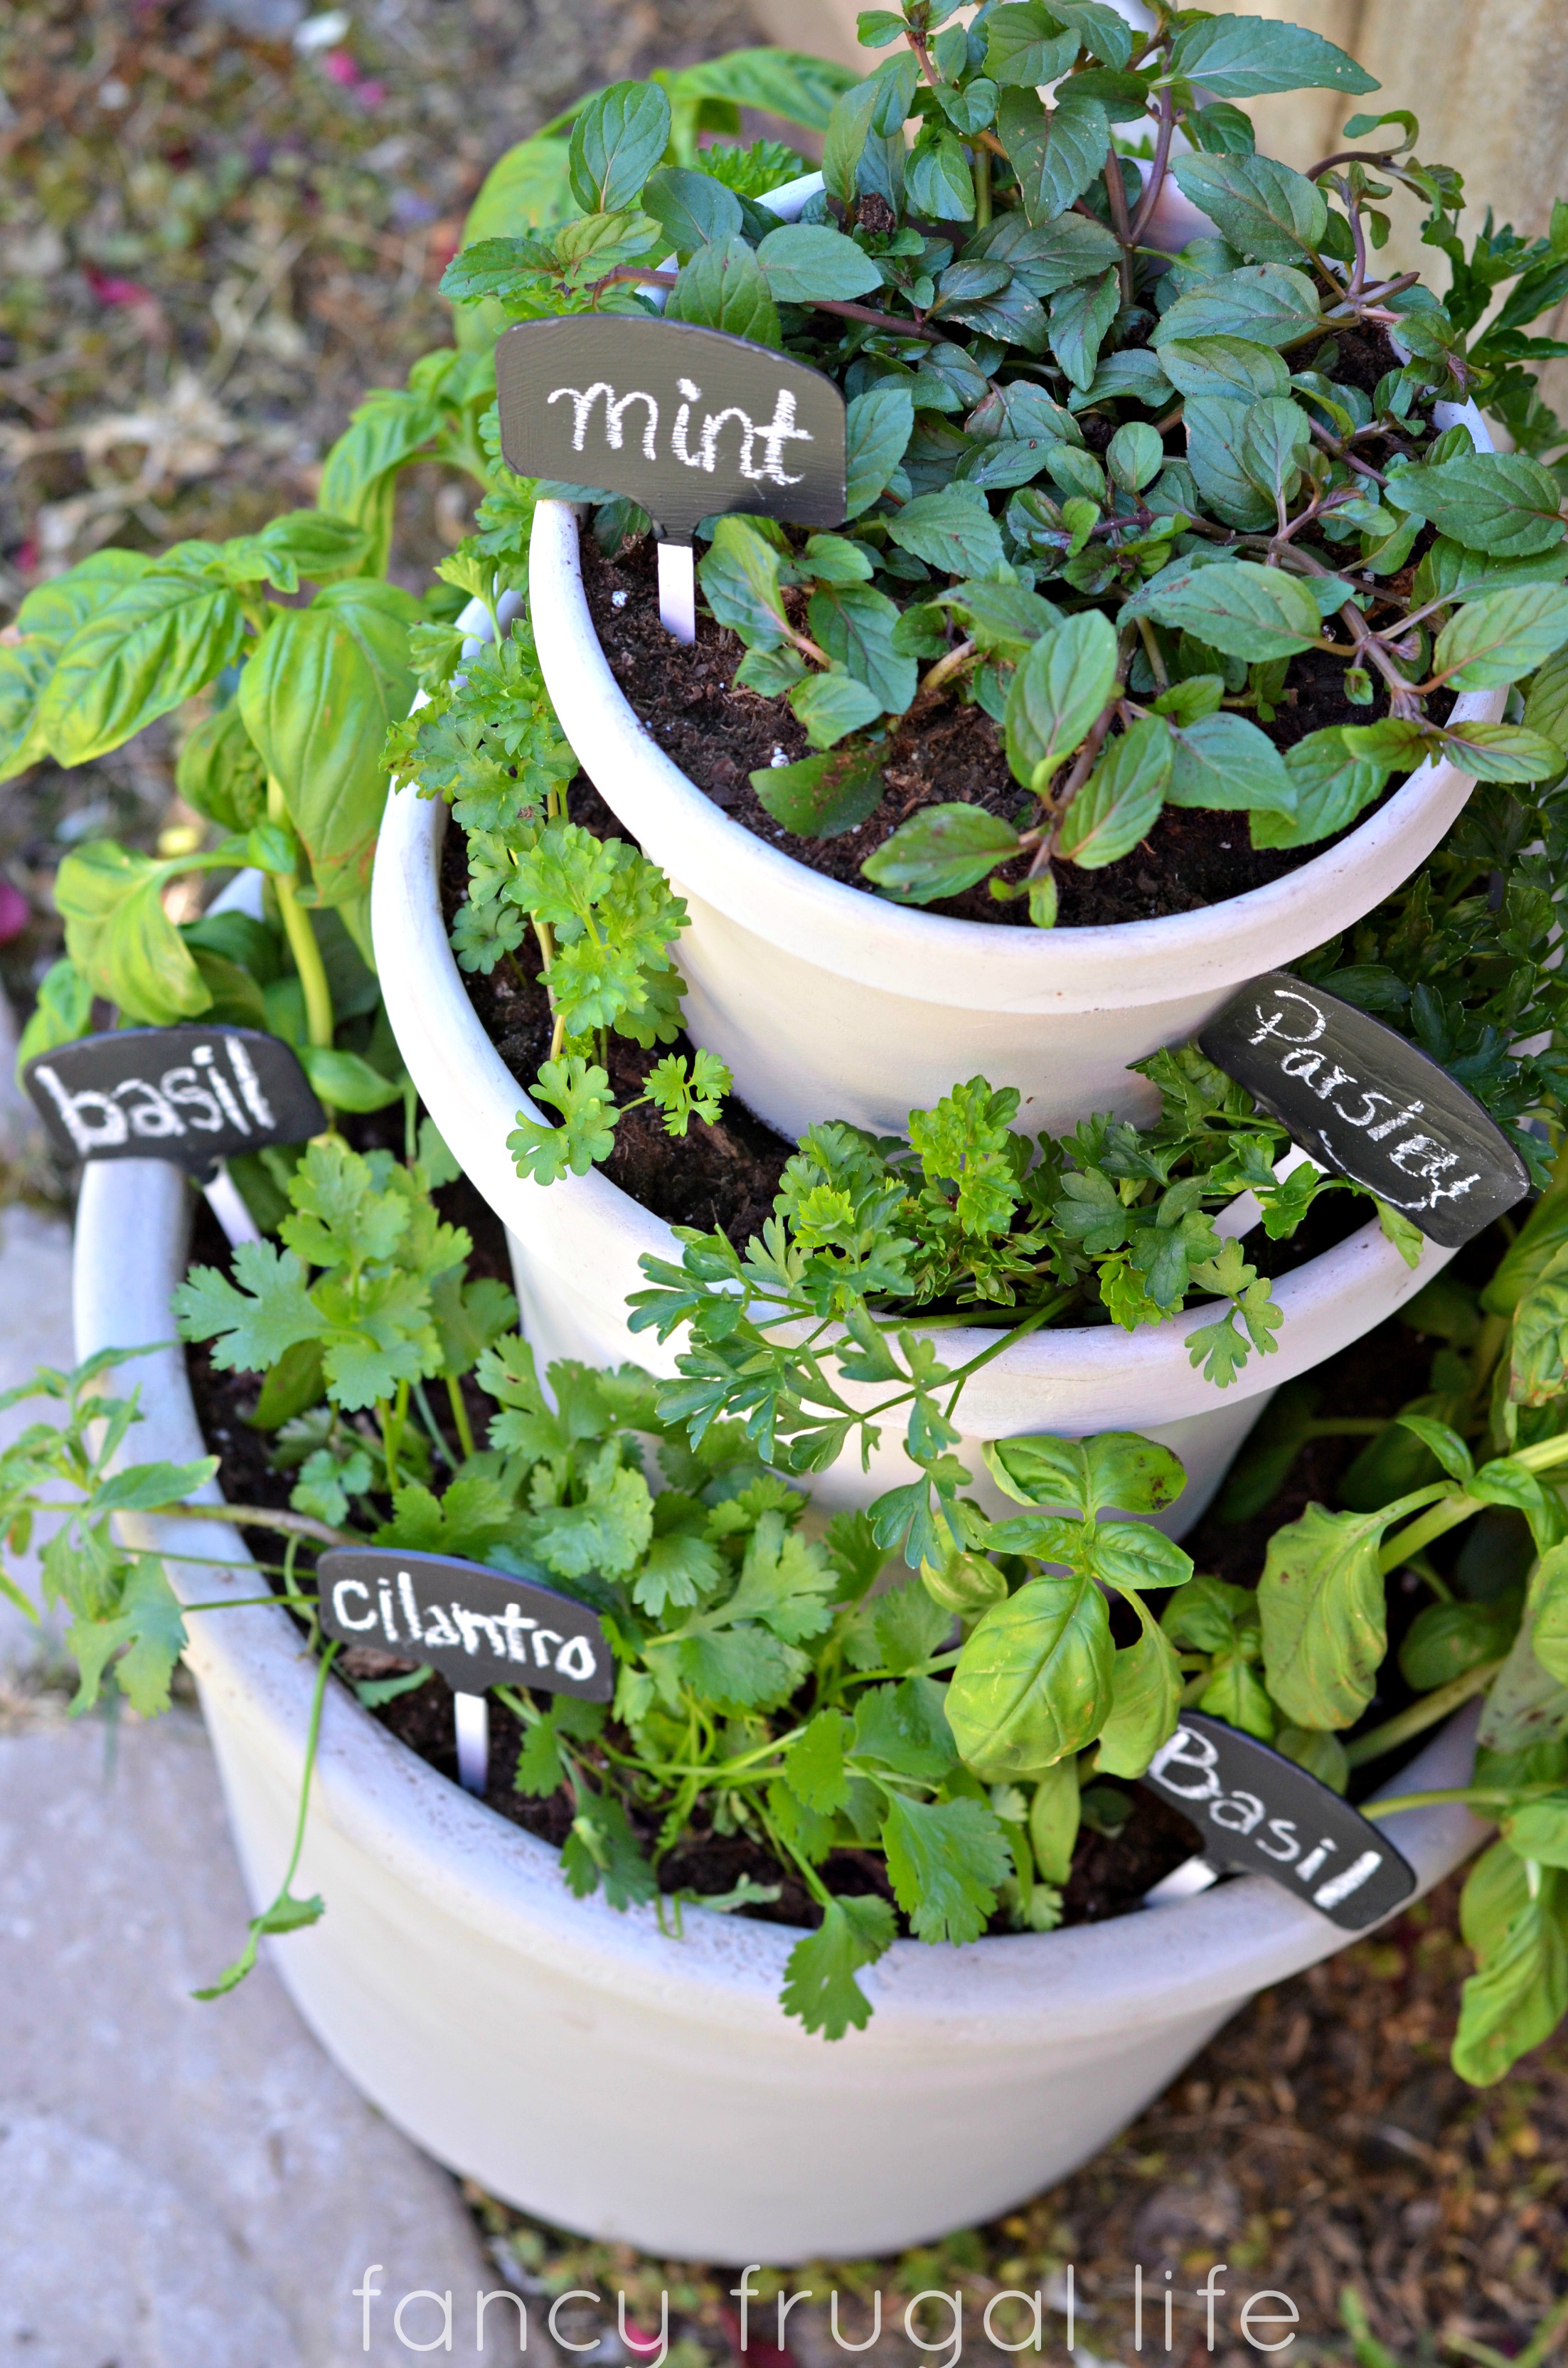 Best ideas about Outdoor Herb Garden Ideas
. Save or Pin Outdoor Herb Garden Ideas The Idea Room Now.